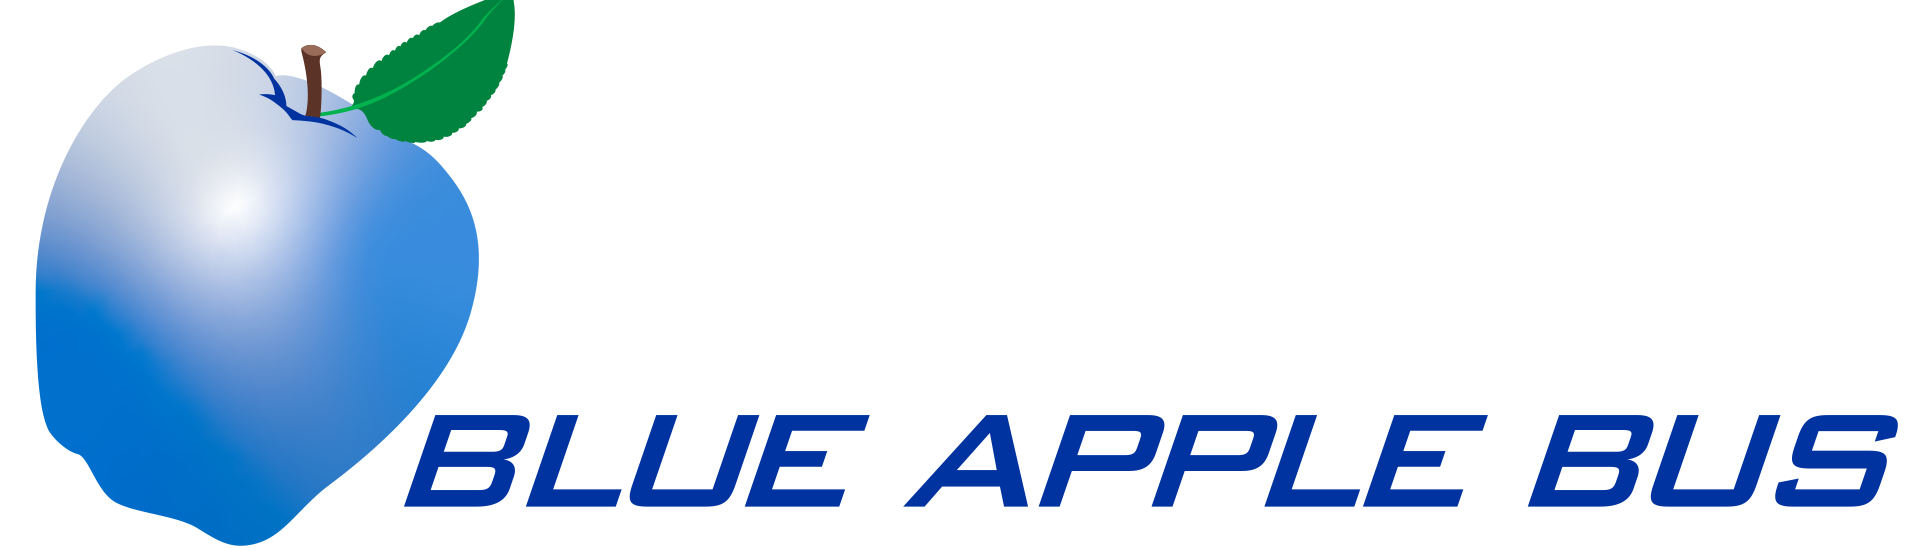 Blue Apple Bus Company